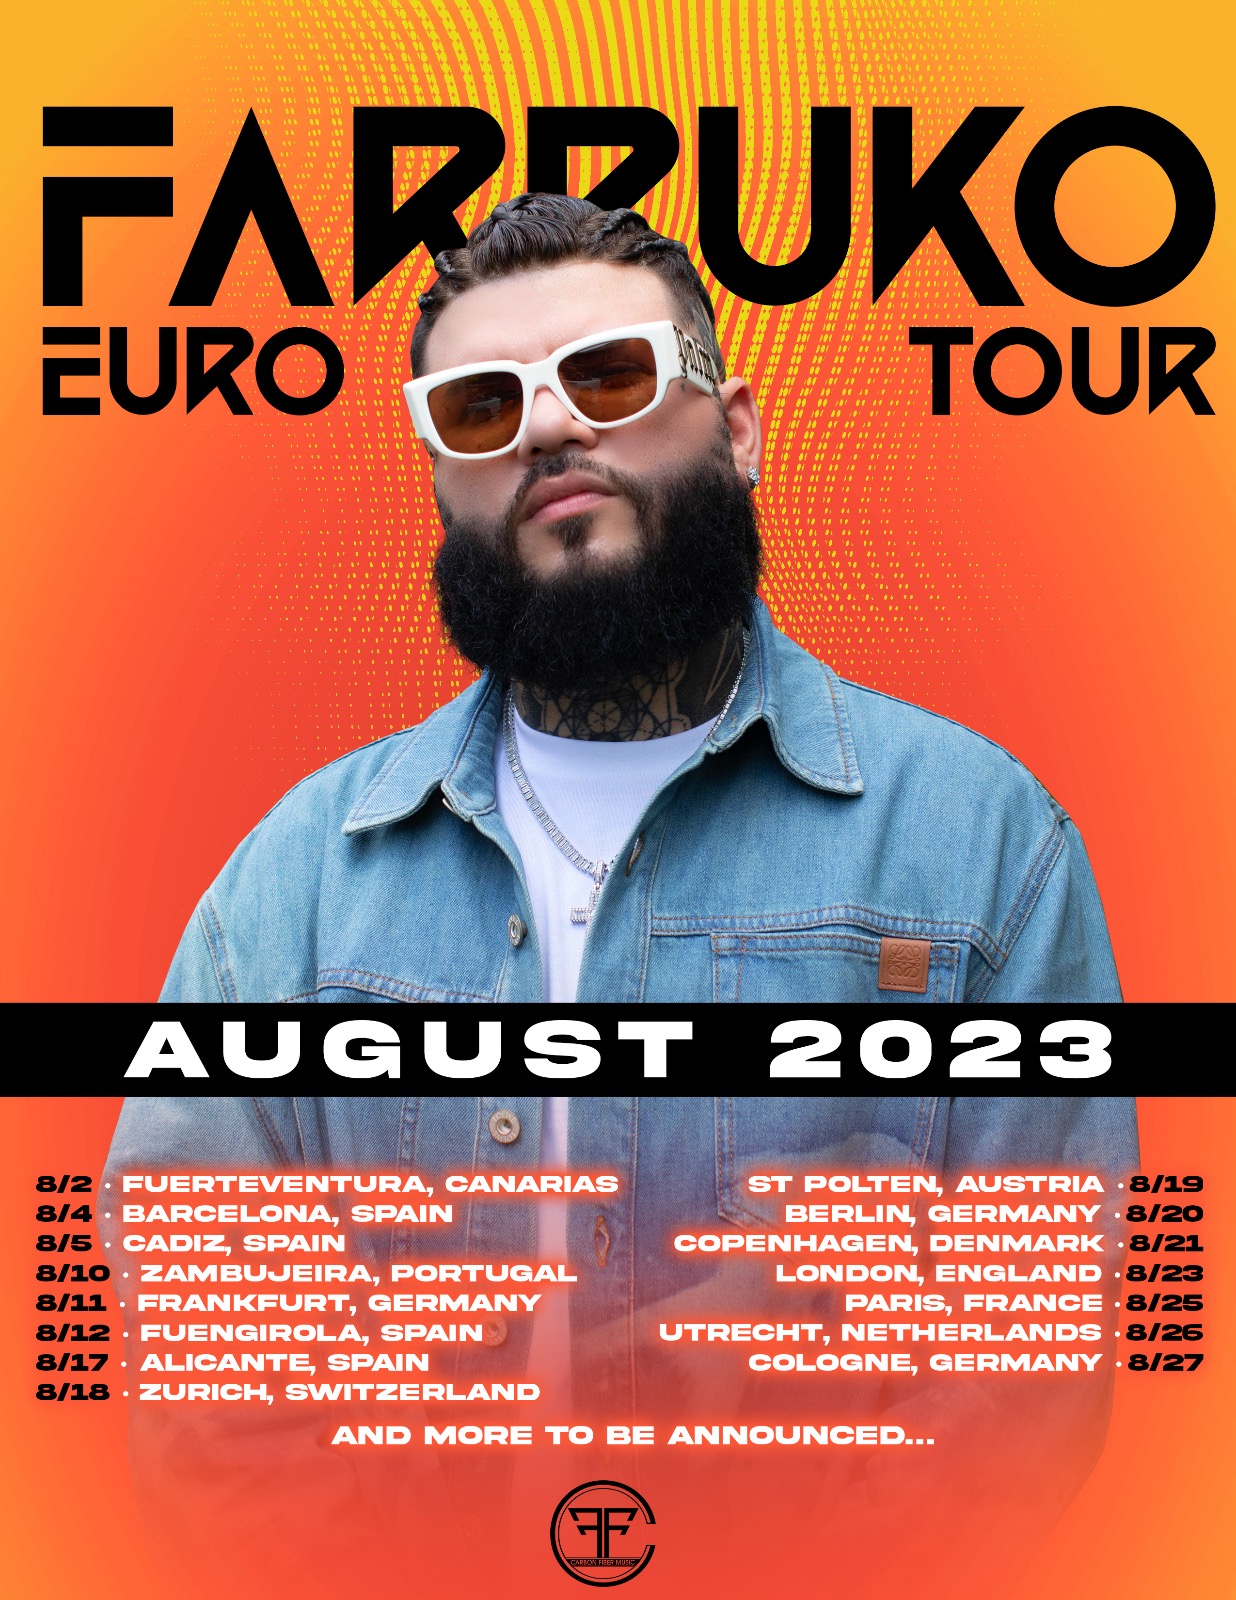 FARRUKO anuncia su tour por Europa